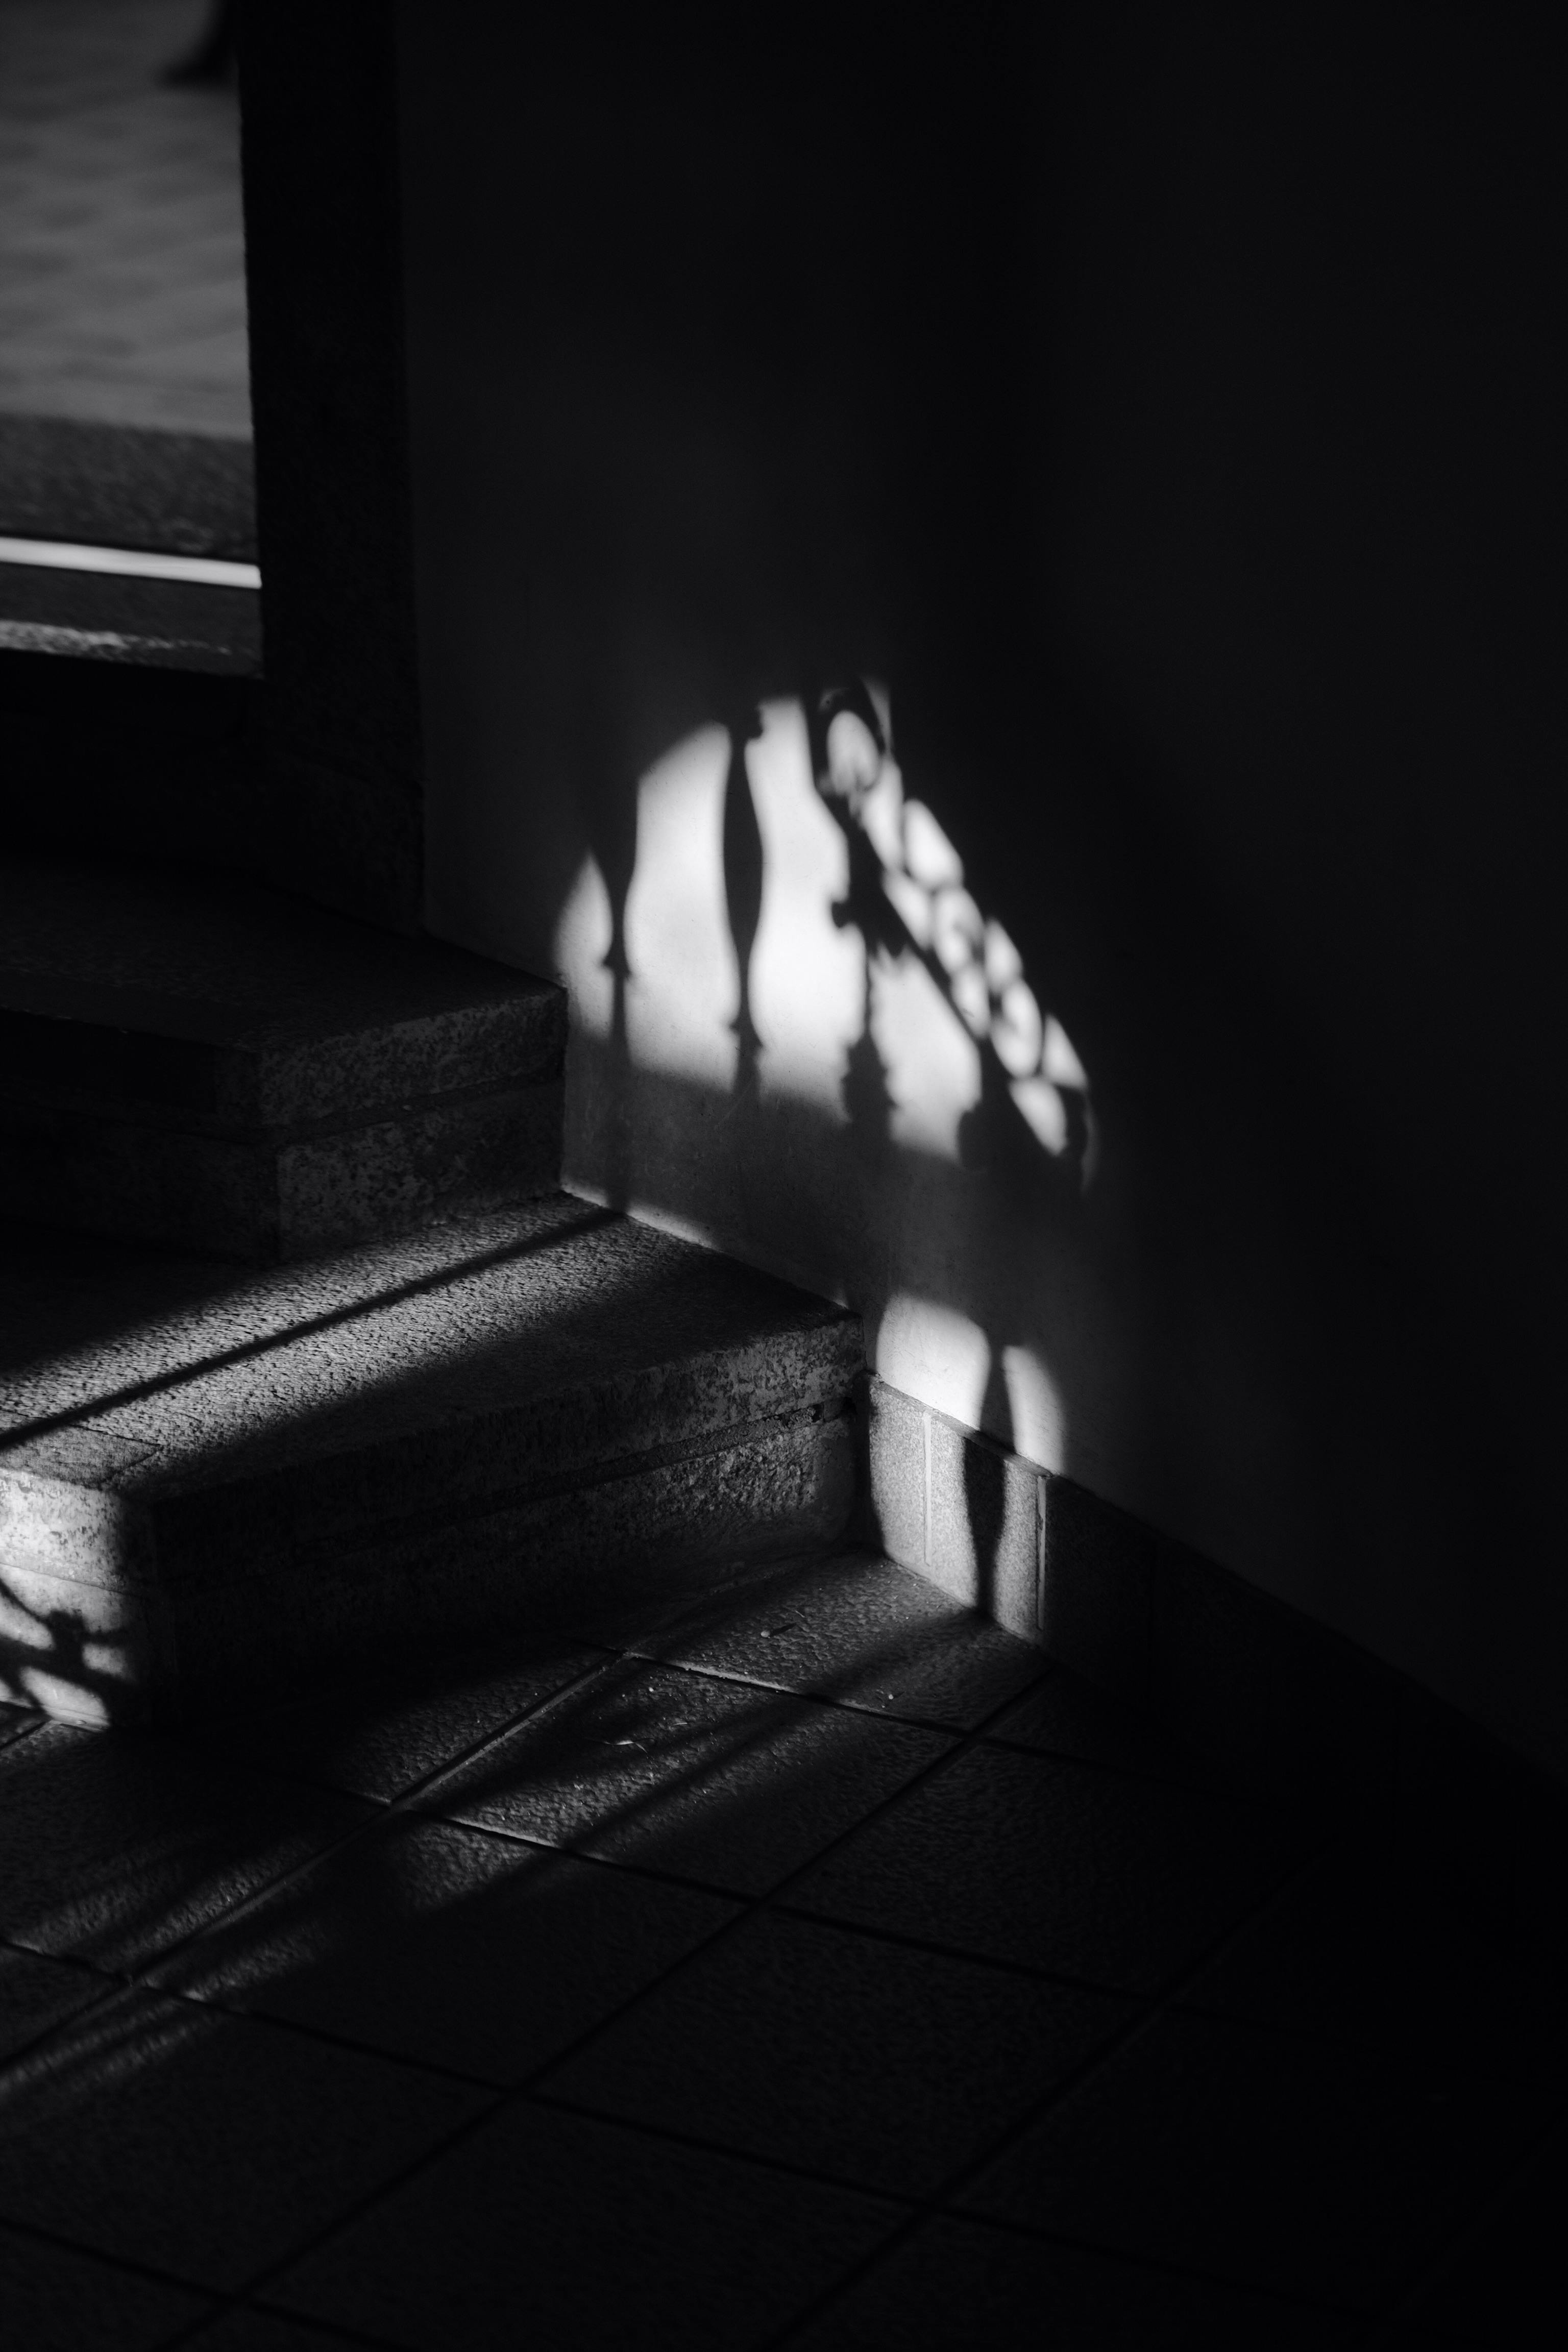 dark room photography steps